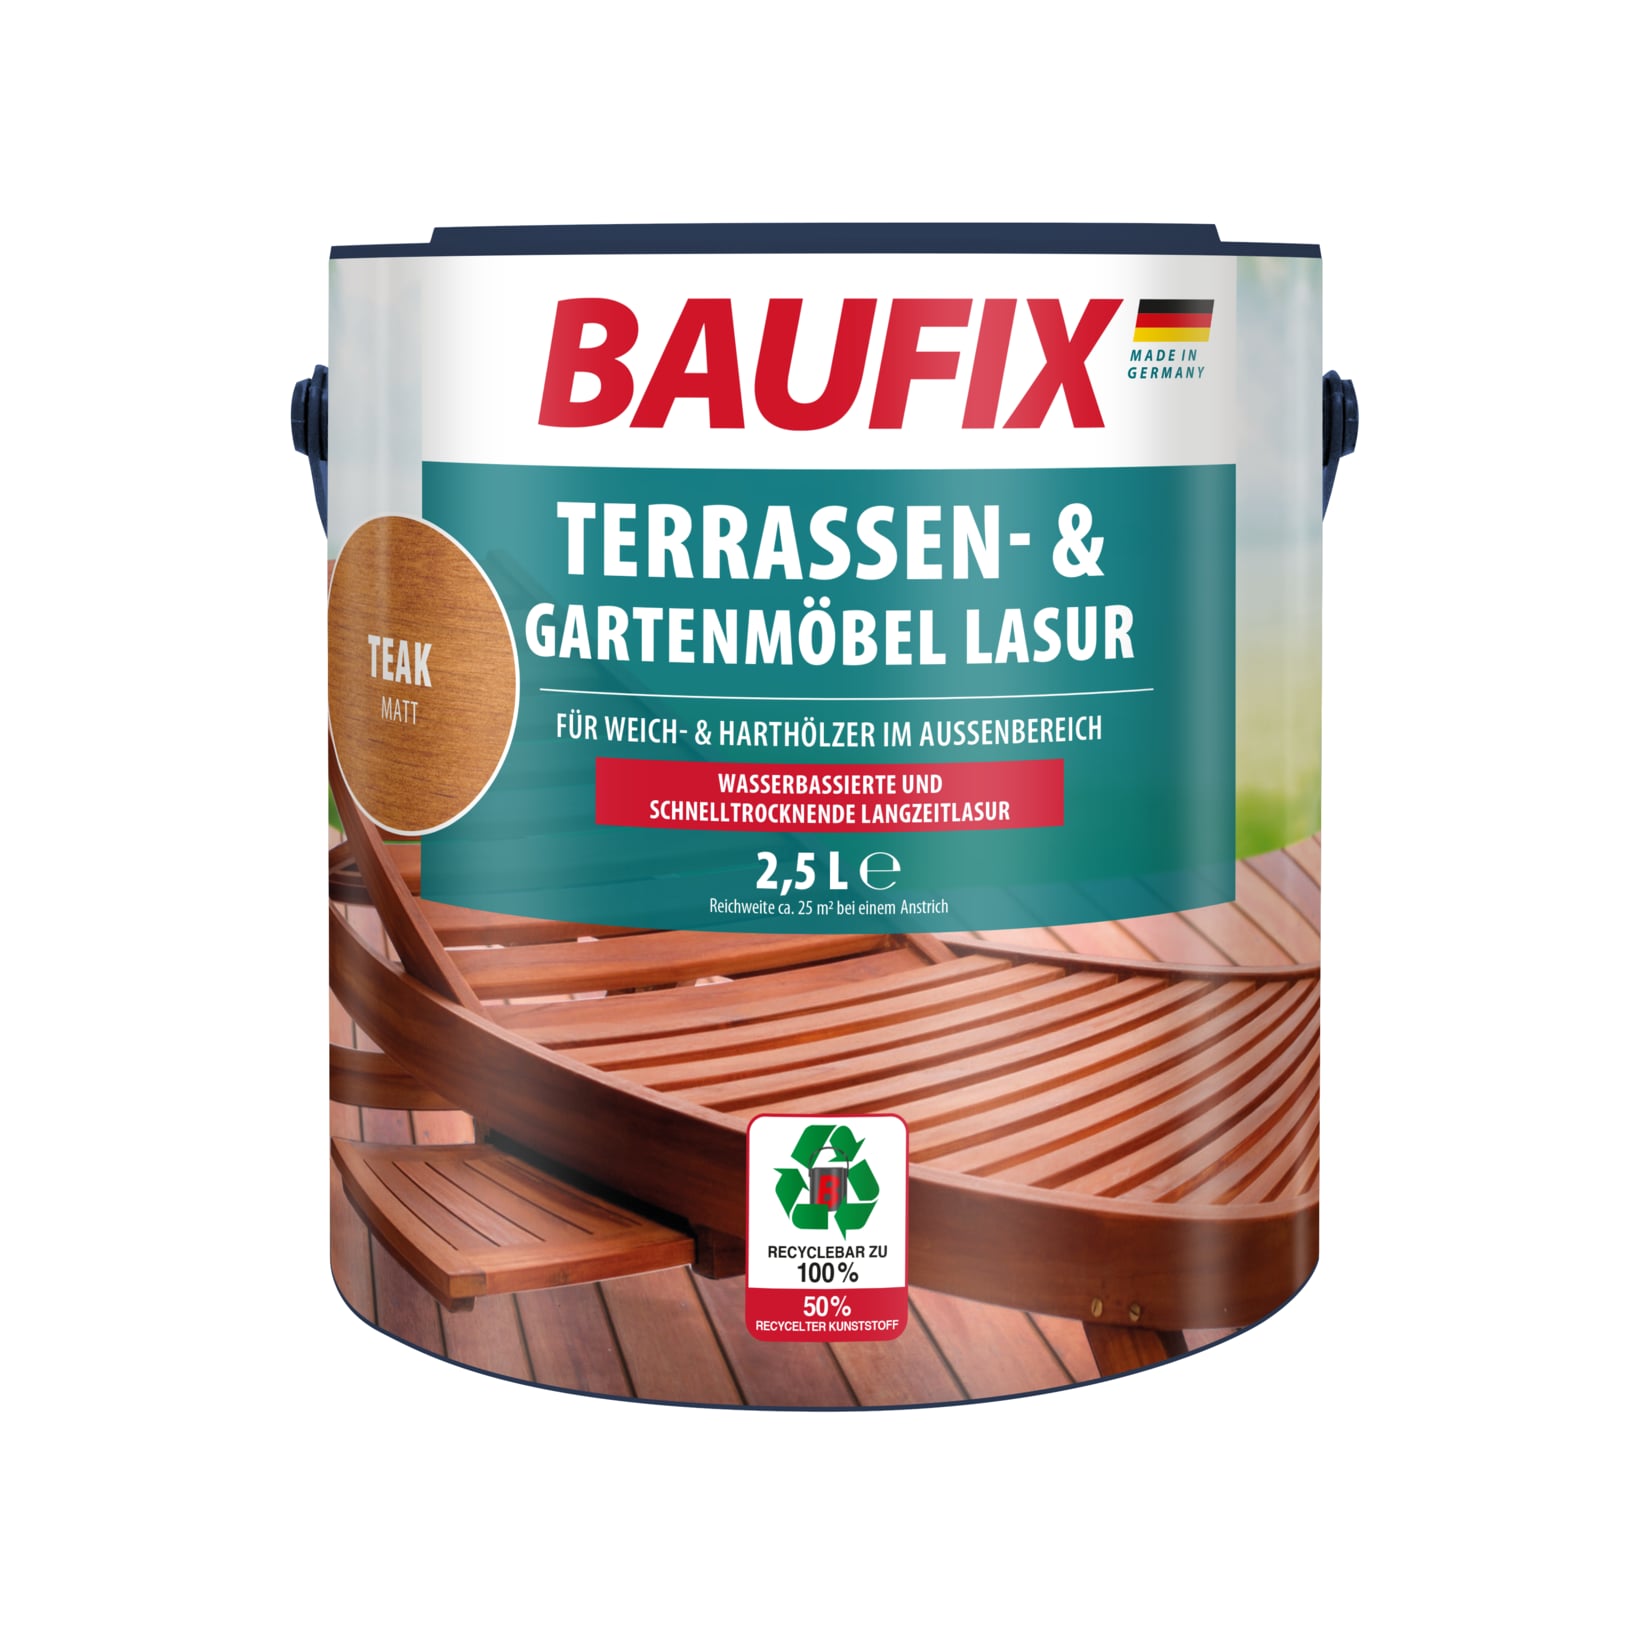 BAUFIX Terrassen- & Gartenmöbel-Lasur teak matt, 2.5 Liter, Holzöl